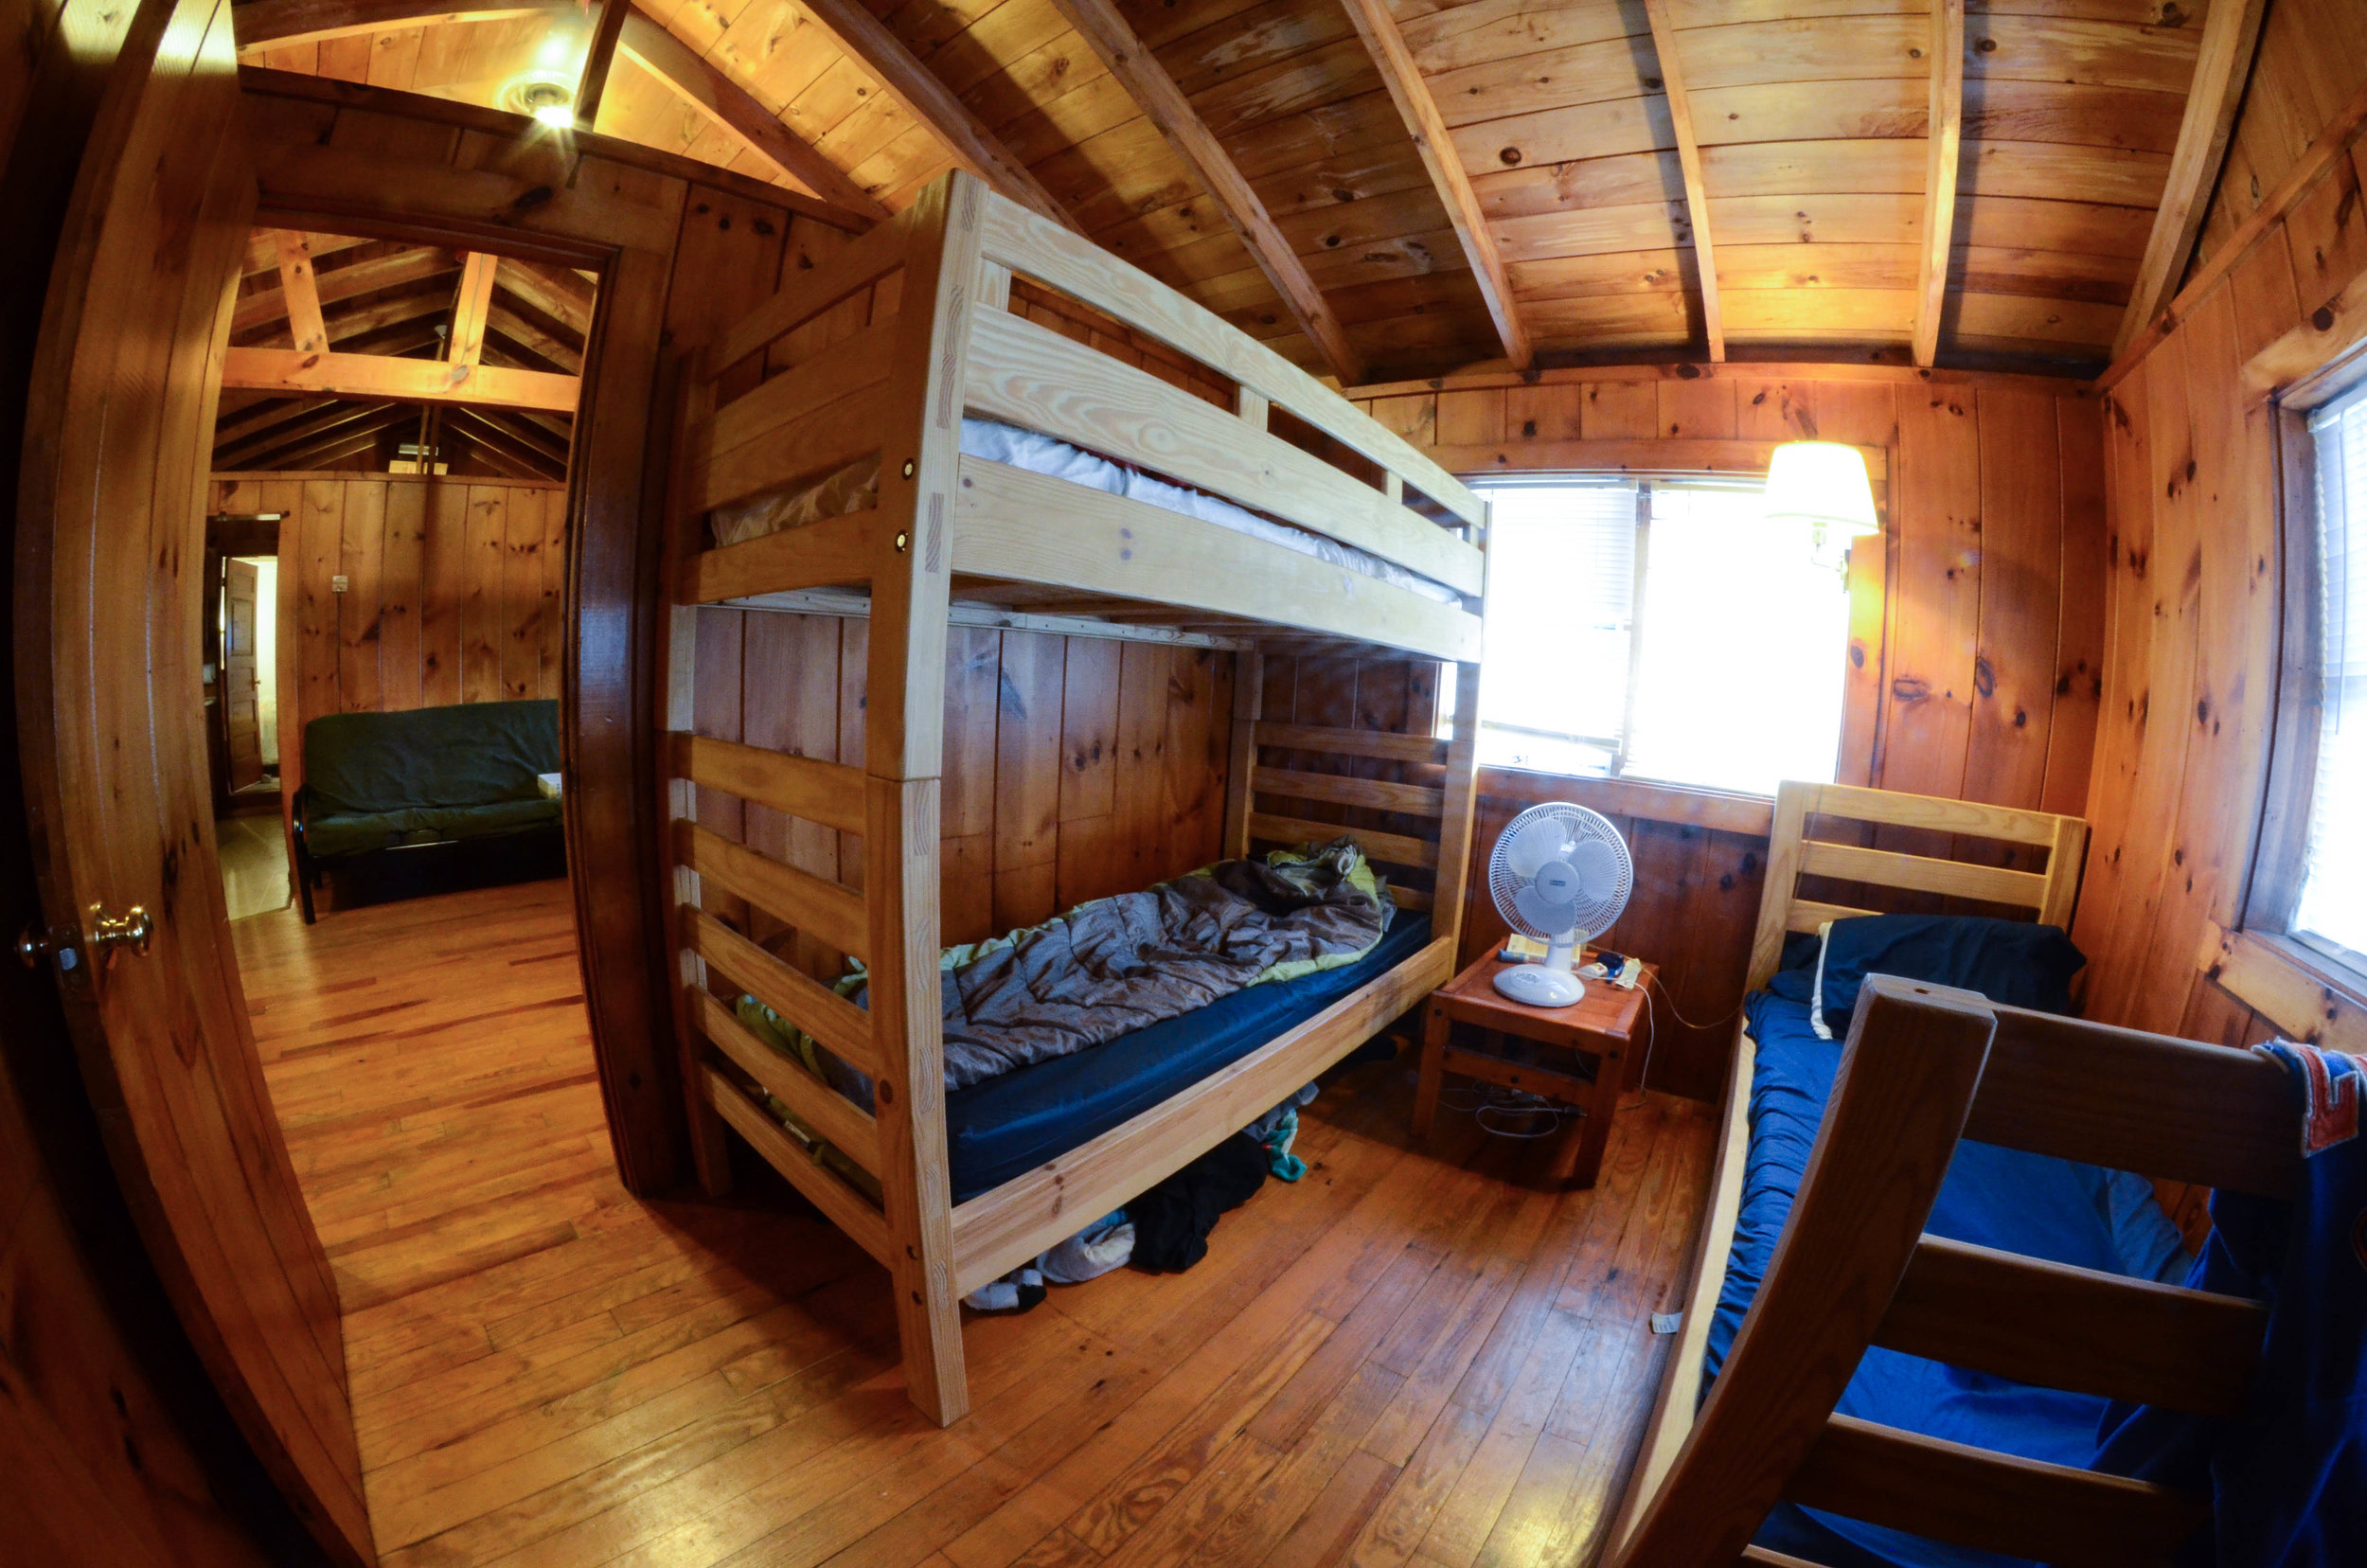 Rental Property Cabin Interior Bunk Beds